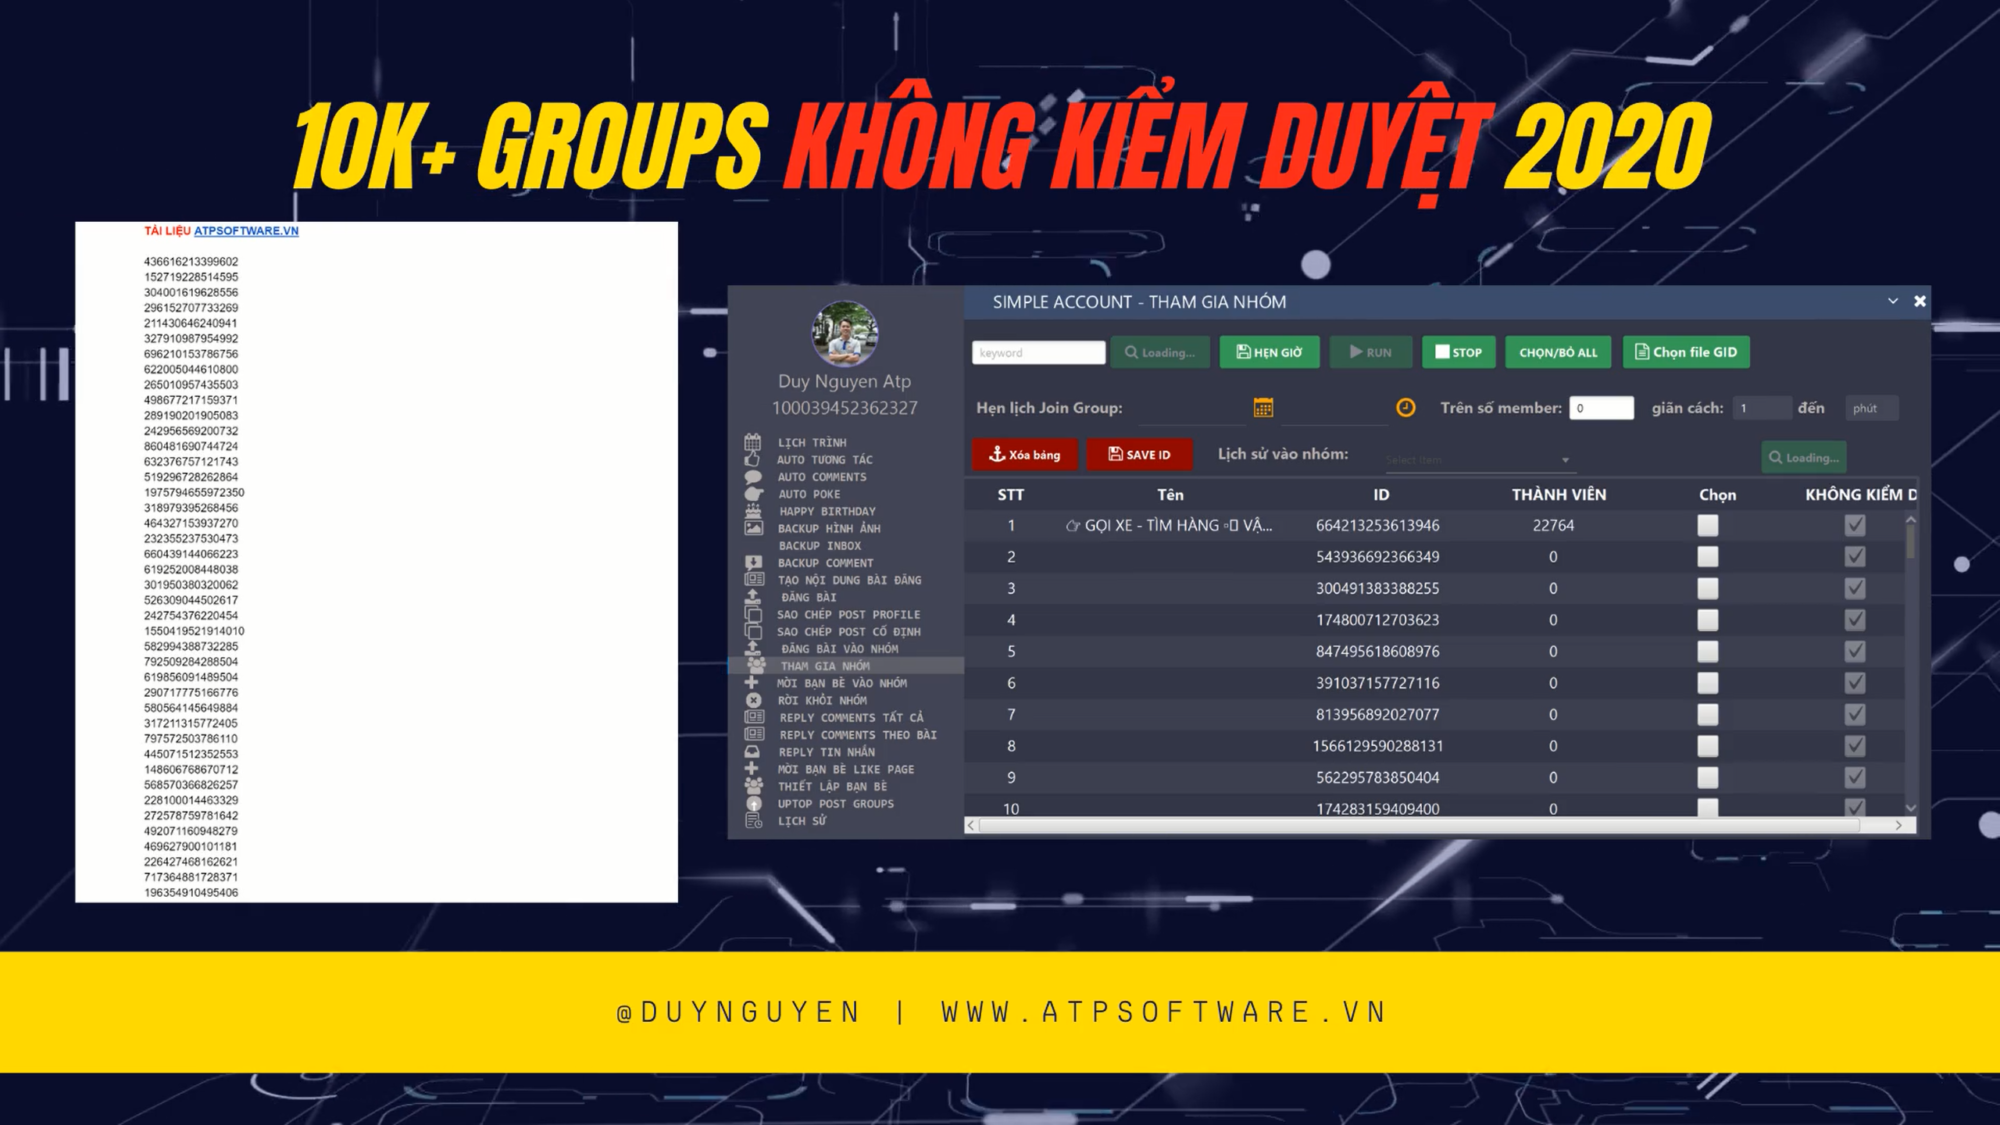 SHARE DATA 10K+ Groups KHÔNG KIỂM DUYỆT 2020 - Marketing Online